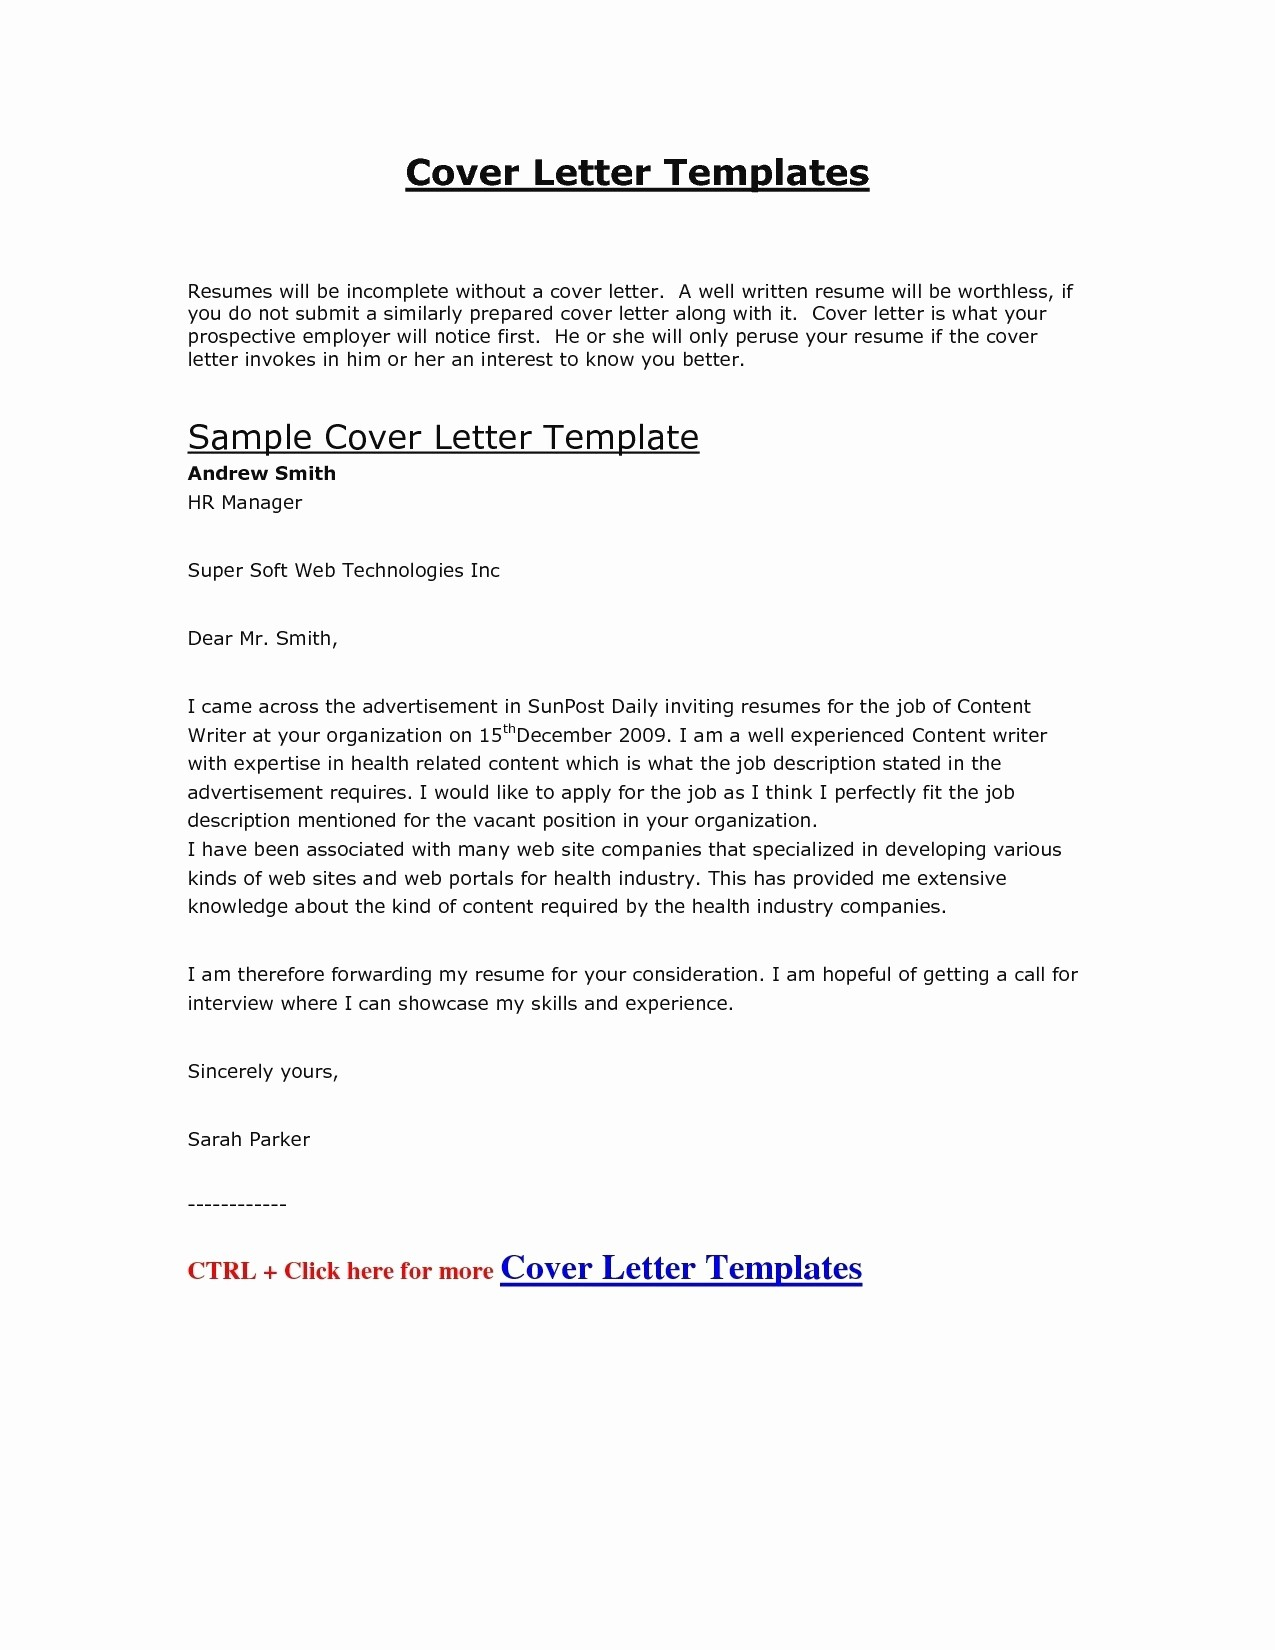 Cover Letter Format Template Bad News Letter Template Collection Letter Template Collection